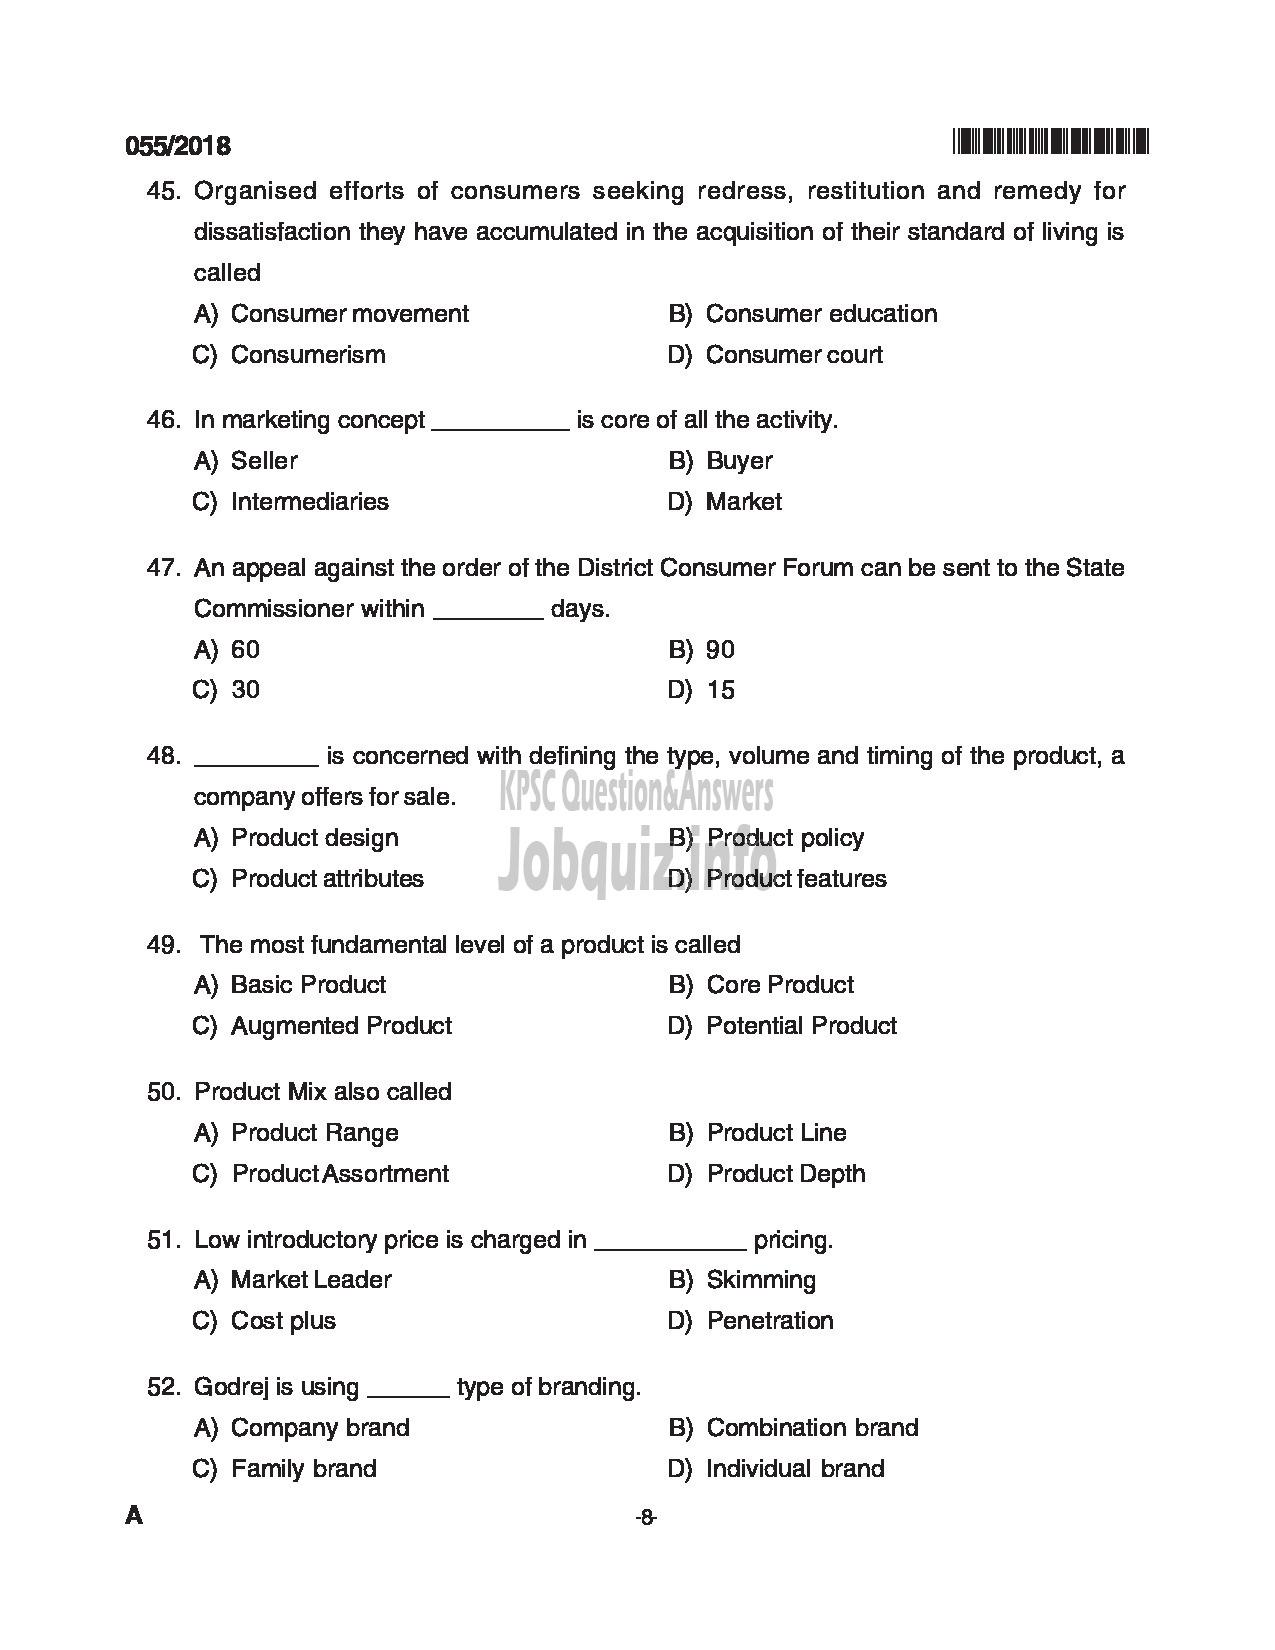 Kerala PSC Question Paper - VOCATIONAL INSTRUCTOR MARKETING AND SALESMANSHIP VHSE-8